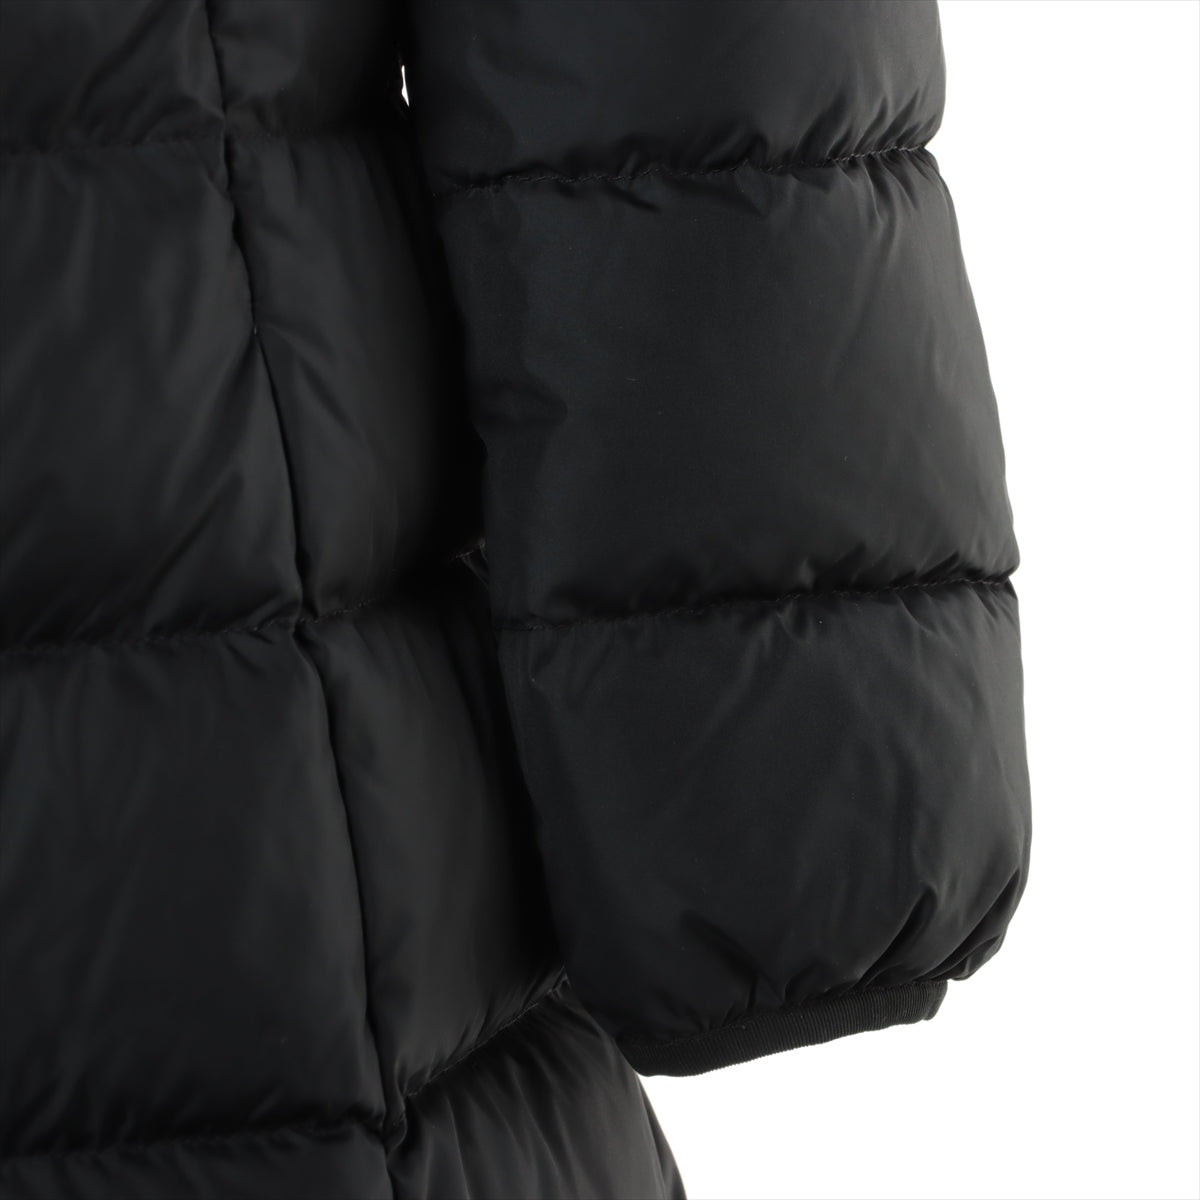 Moncler GIE 22 years Nylon Down coat 1 Ladies' Black  Removable hood